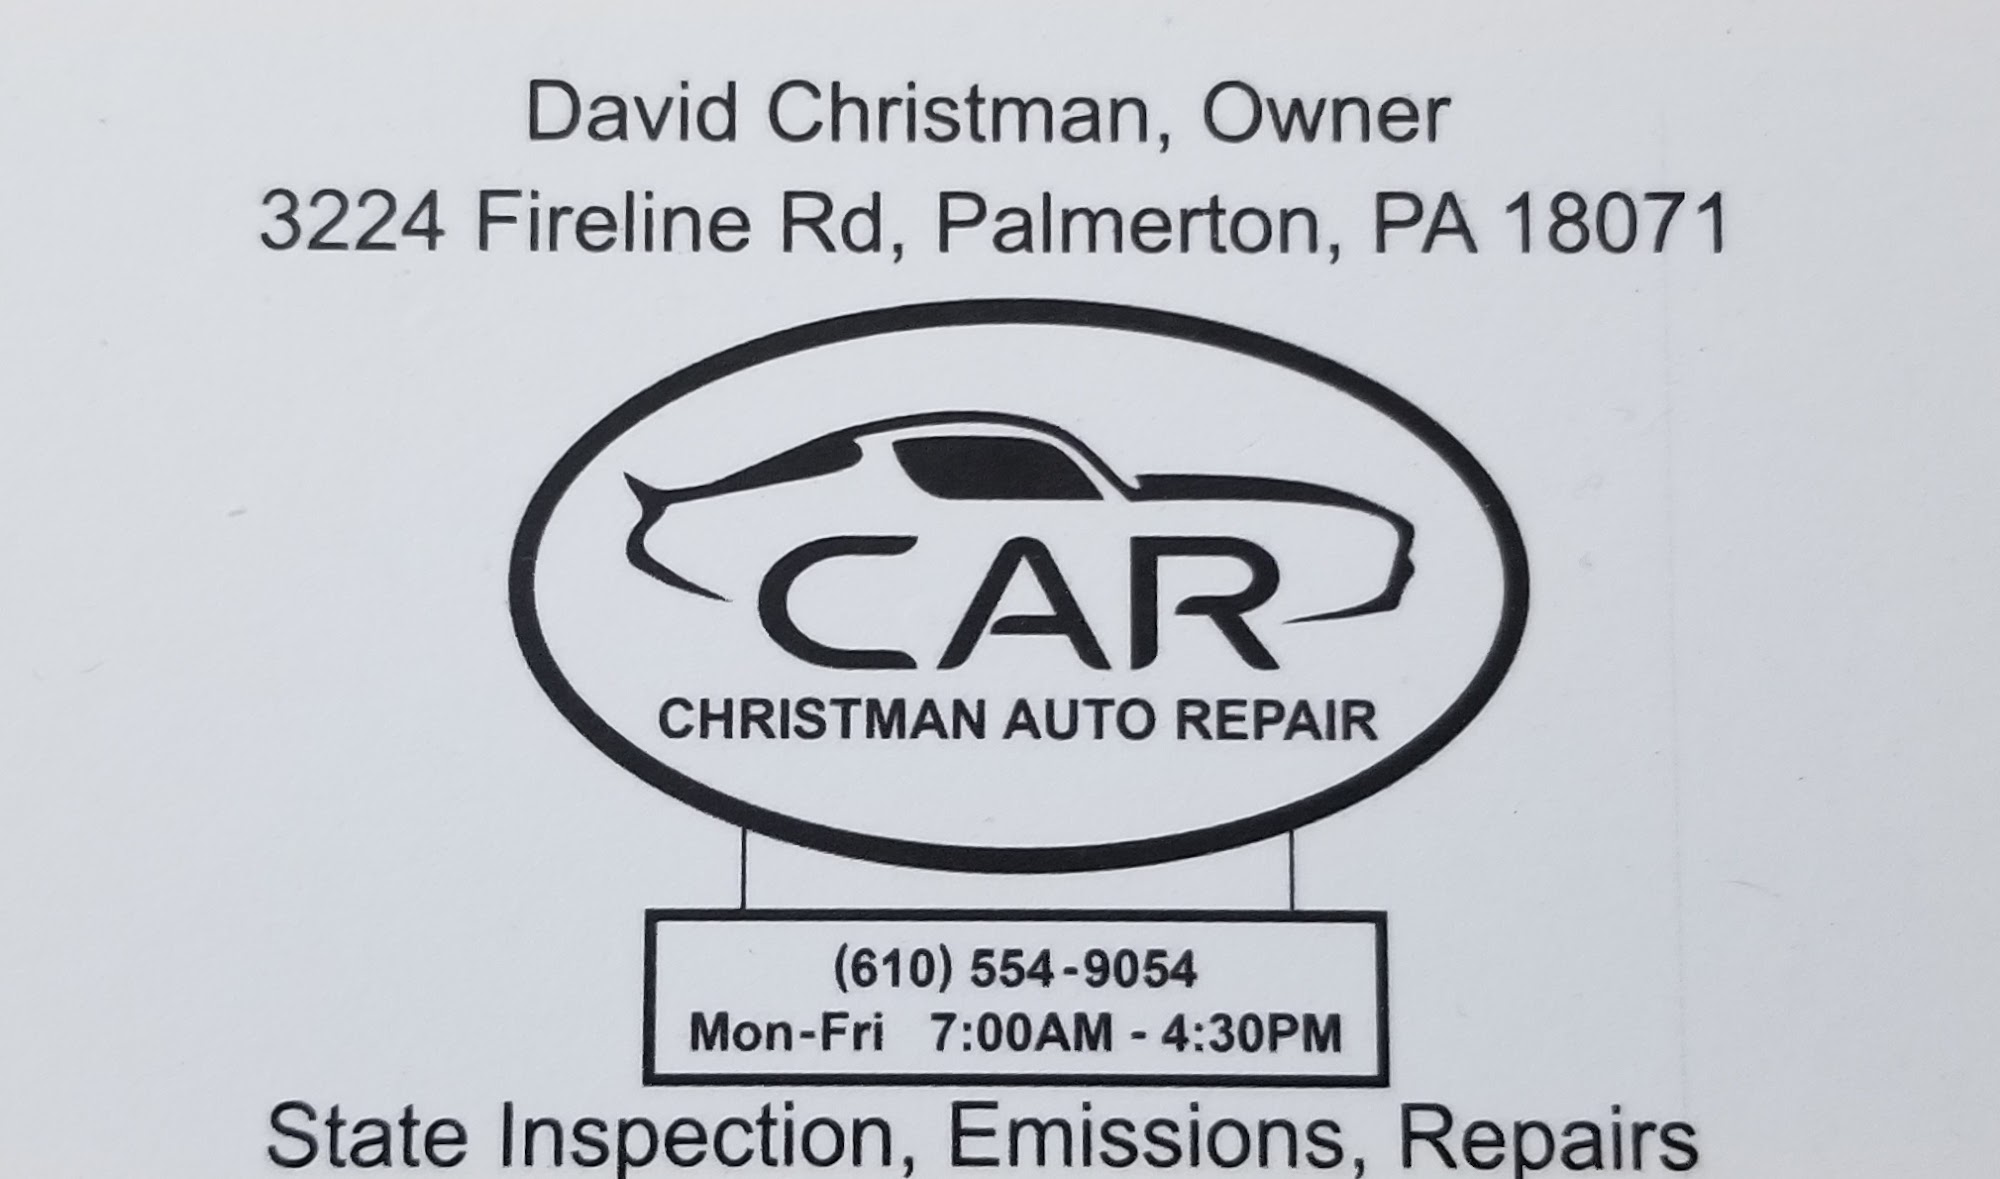 Christman Auto Repair